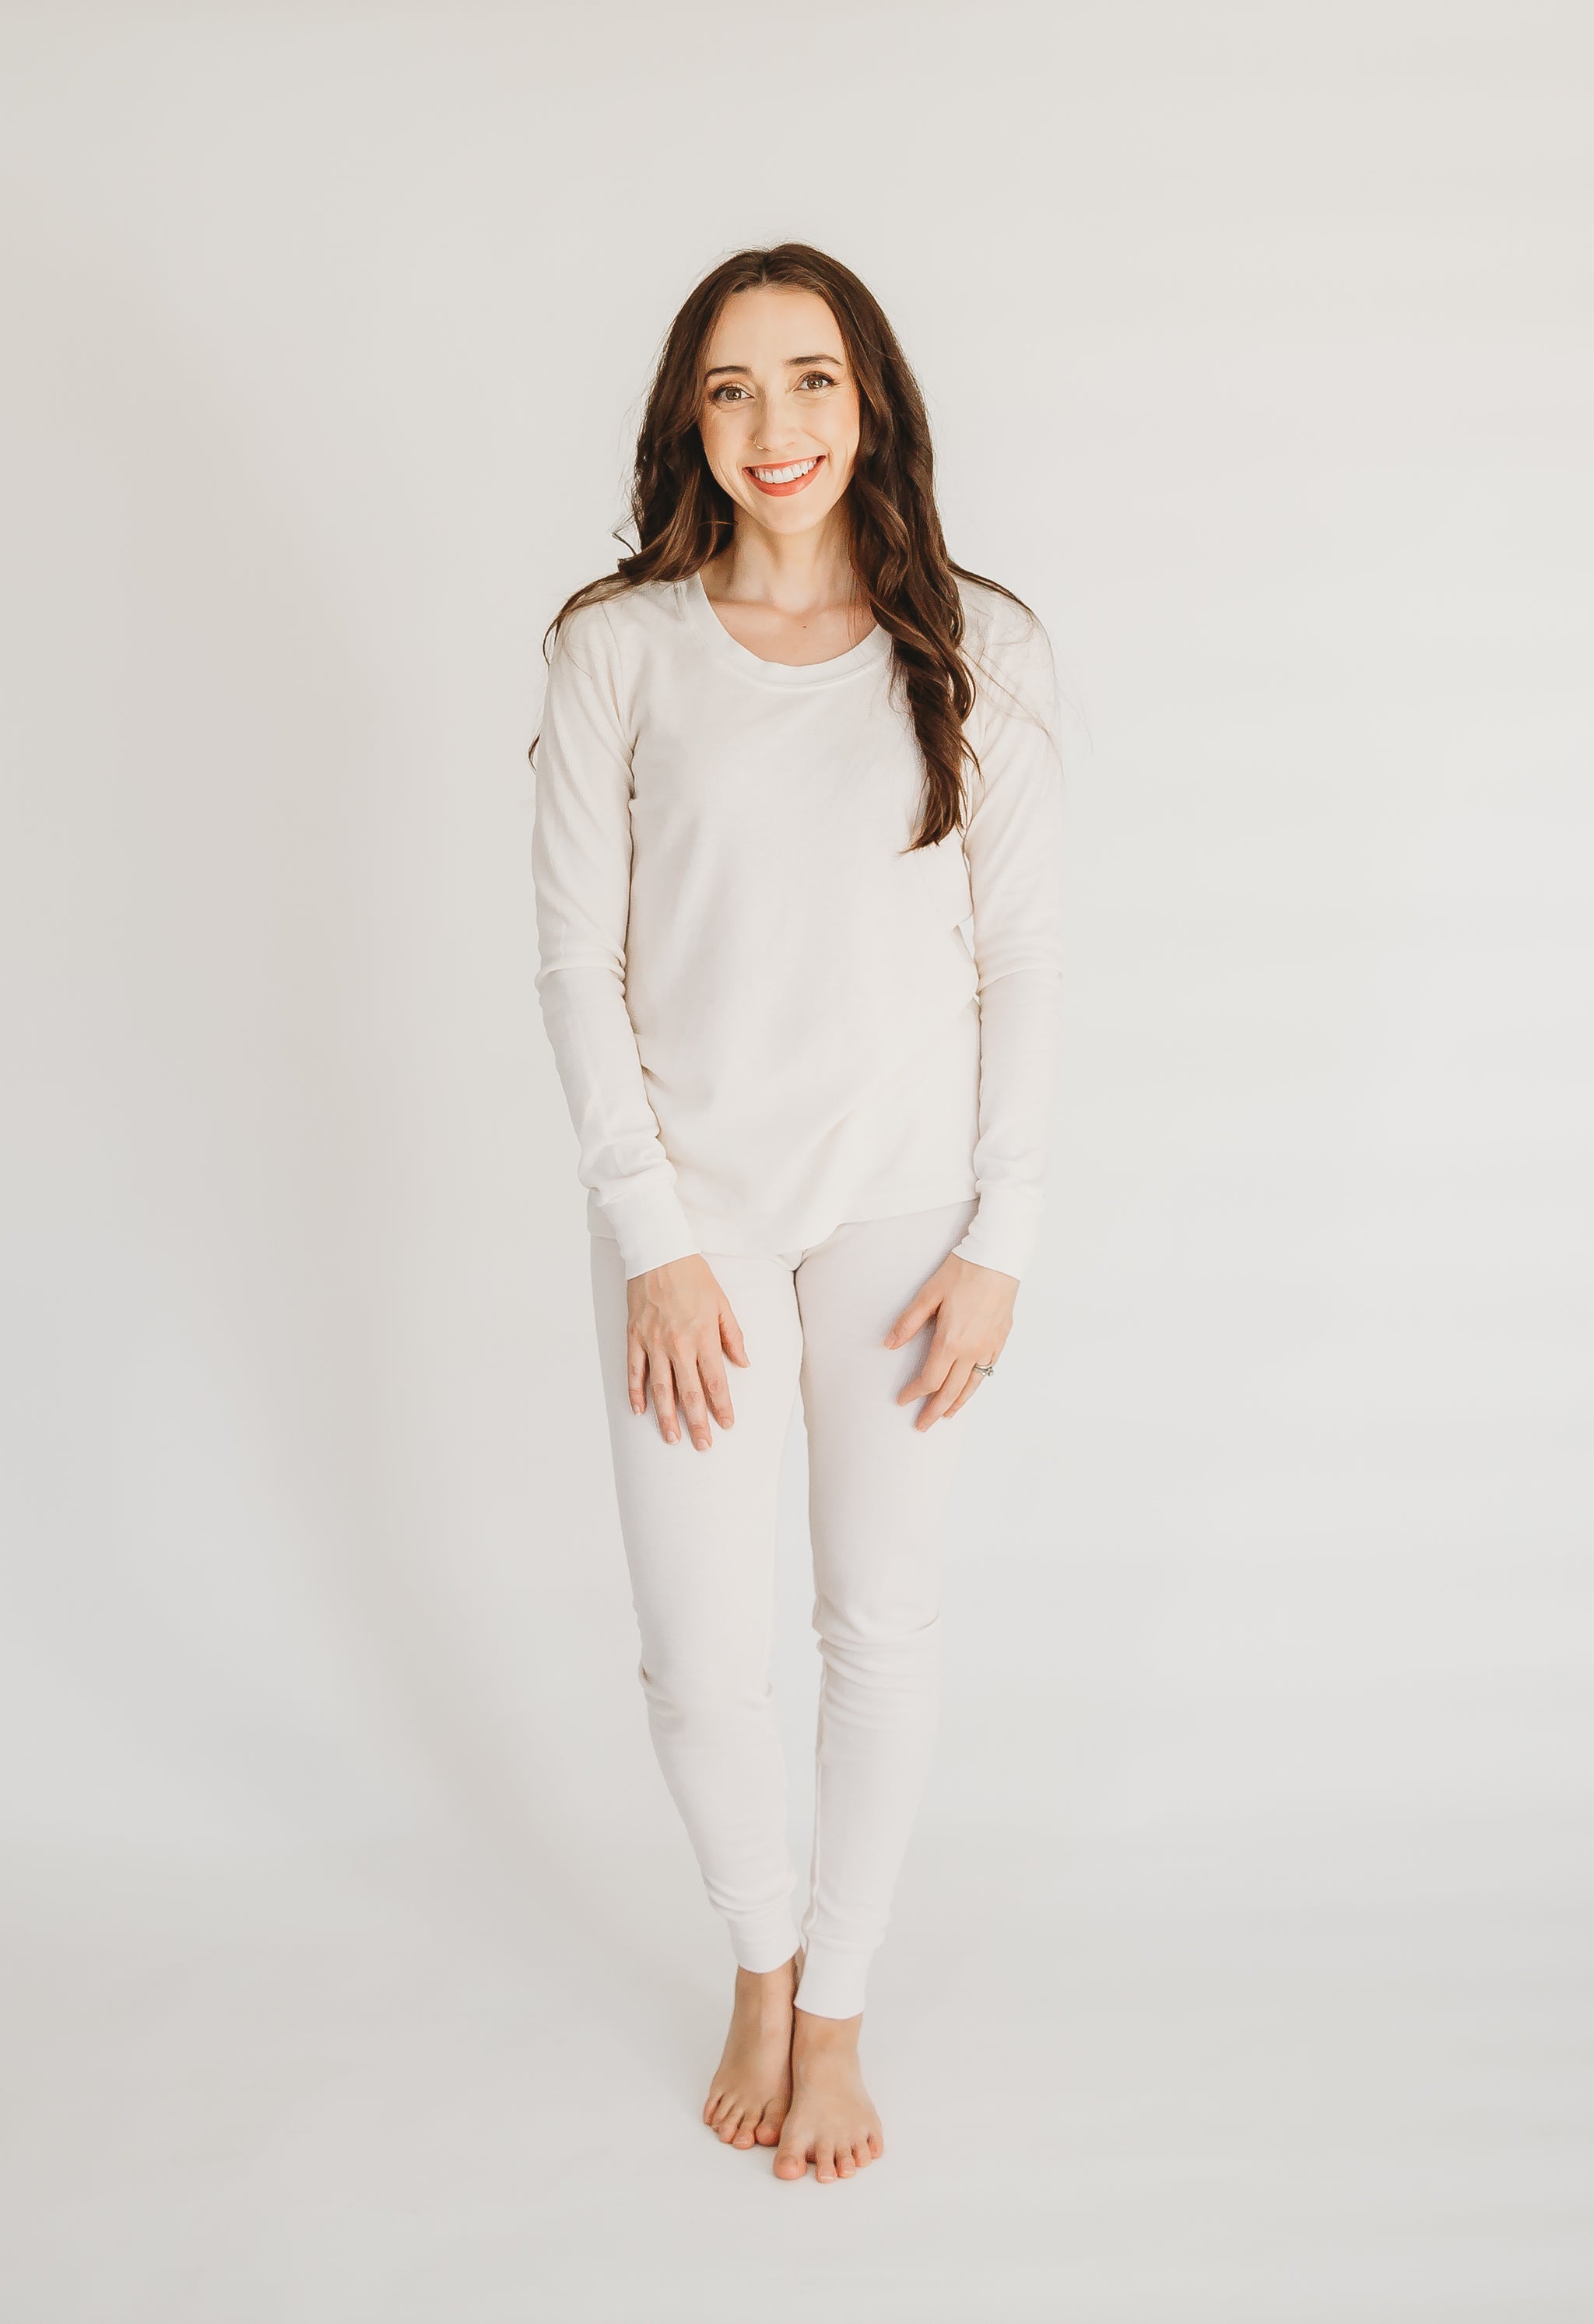 WUHOU Women's 100% Cotton Thermal Underwear Two Piece Long Johns  Set-Medium-White at  Women's Clothing store